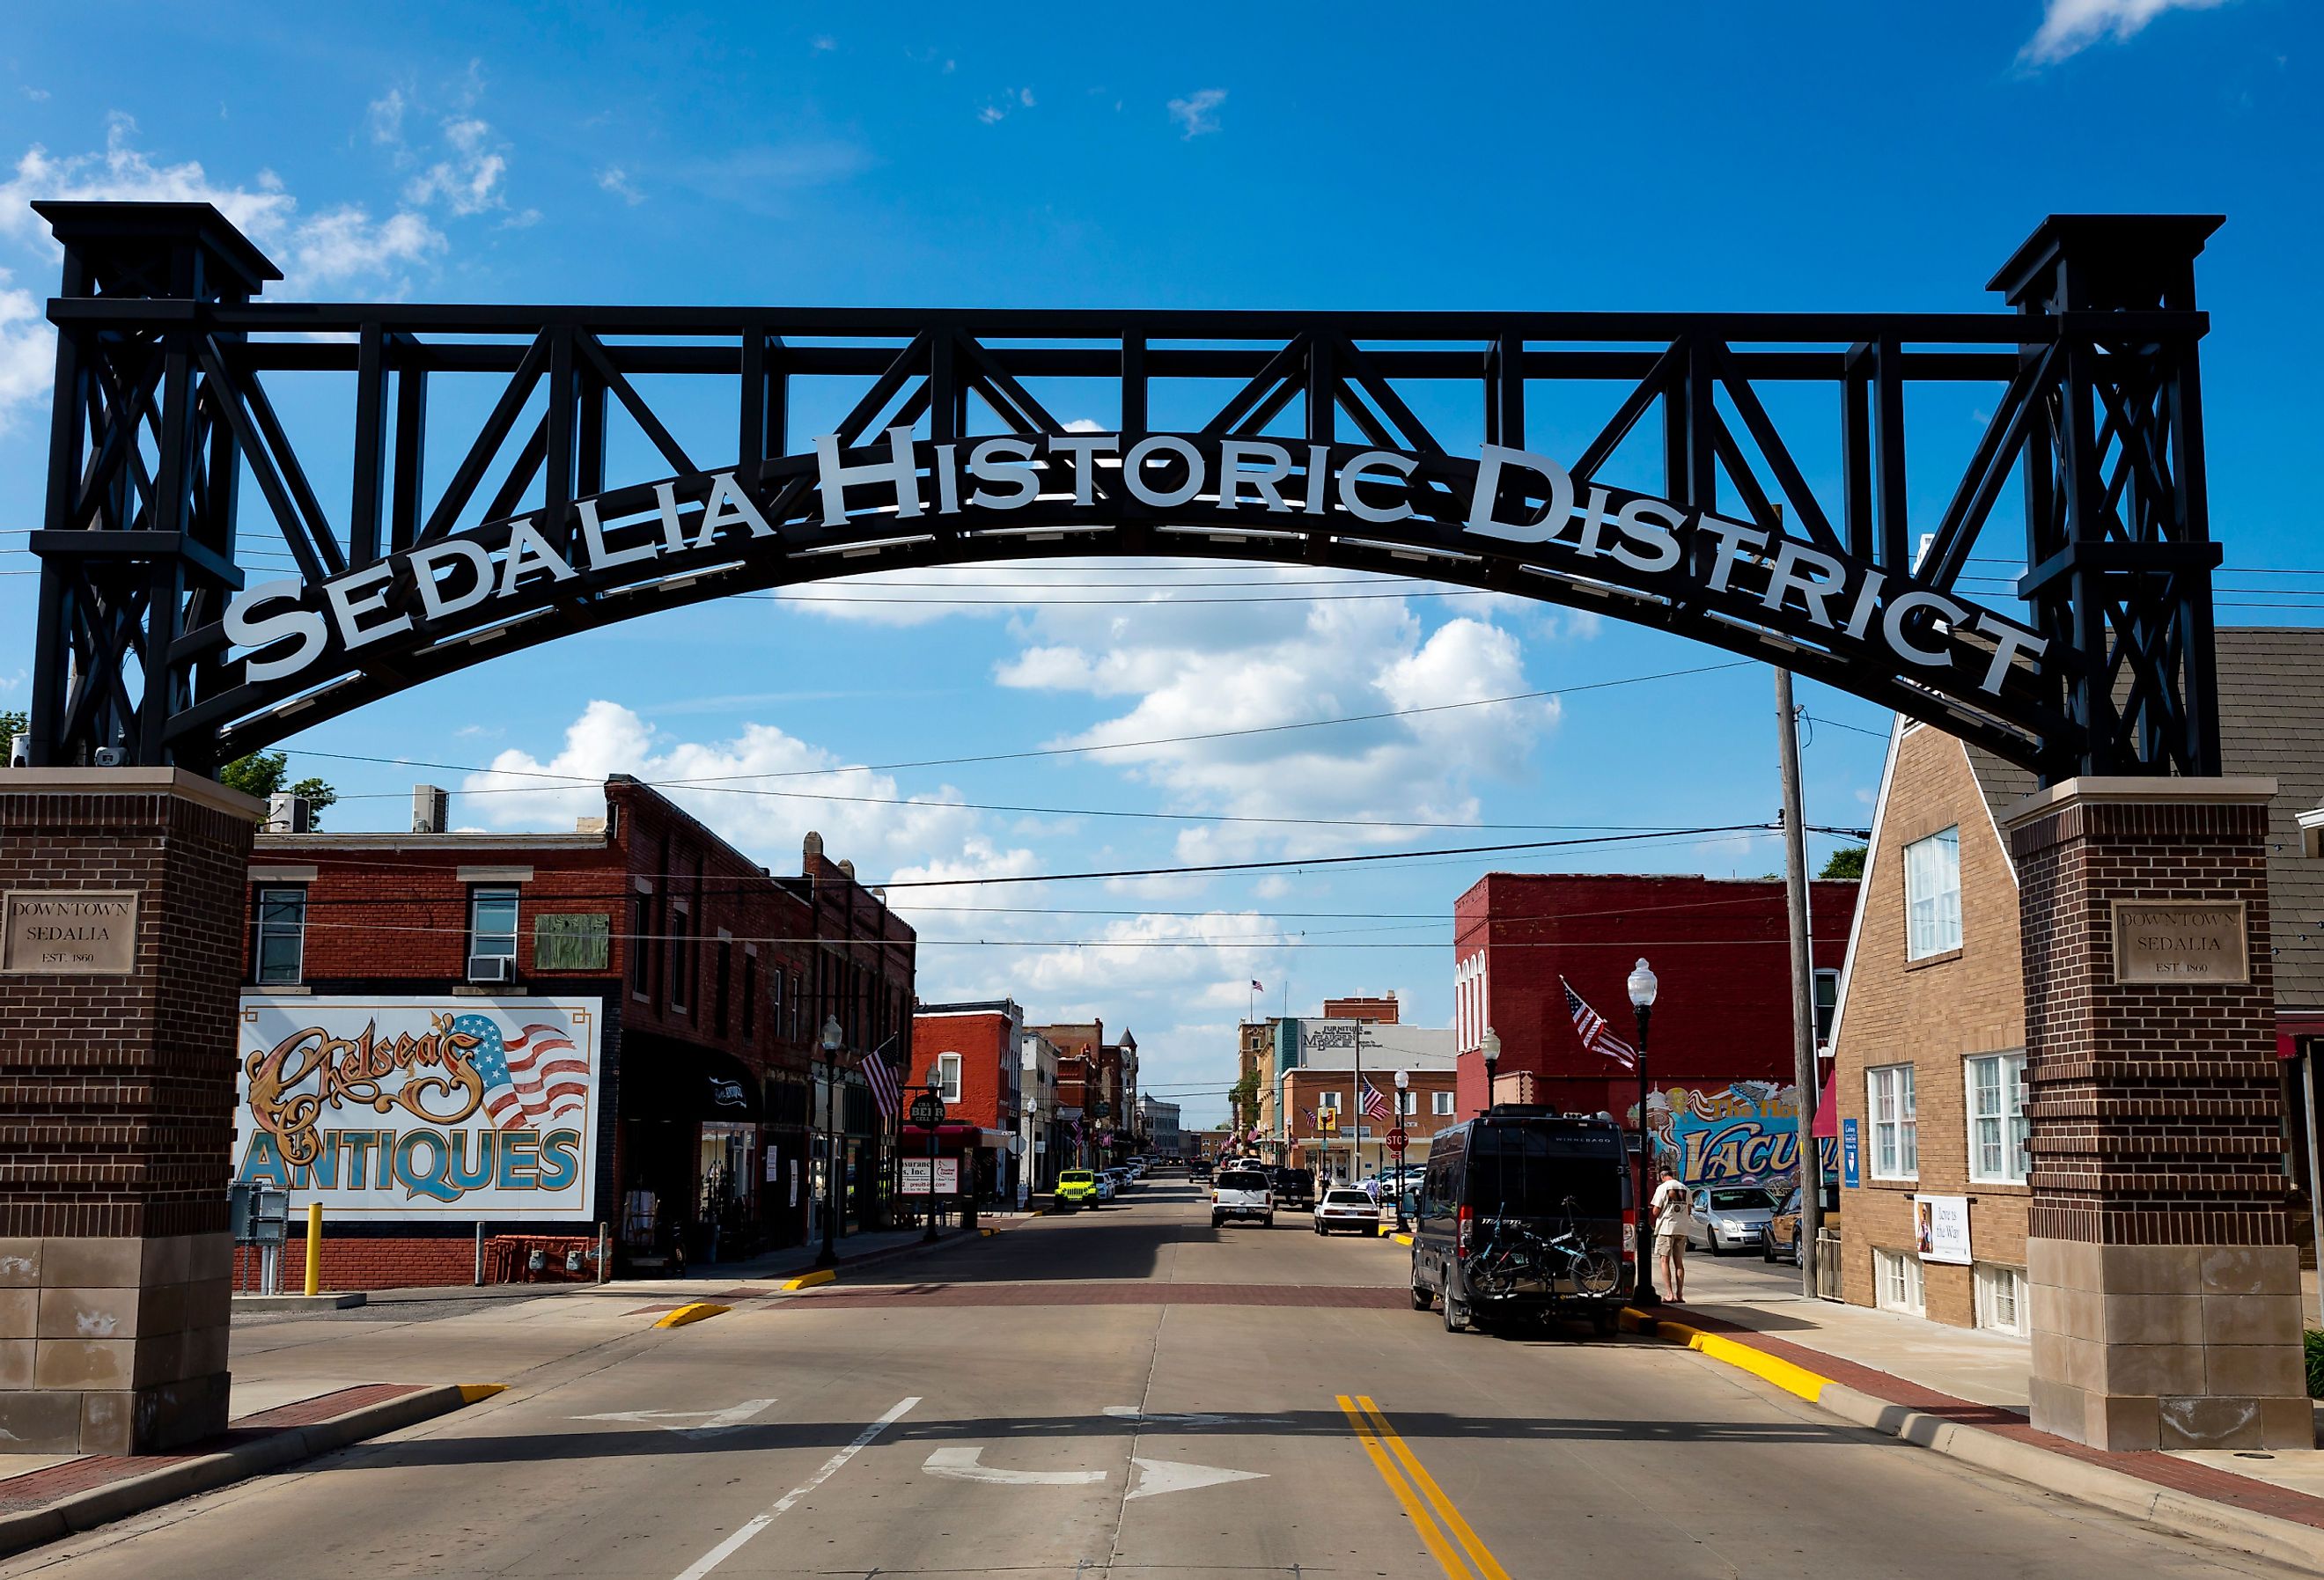 Sedalia Historic District, Missouri. Image credit Joseph Sohm via Shutterstock